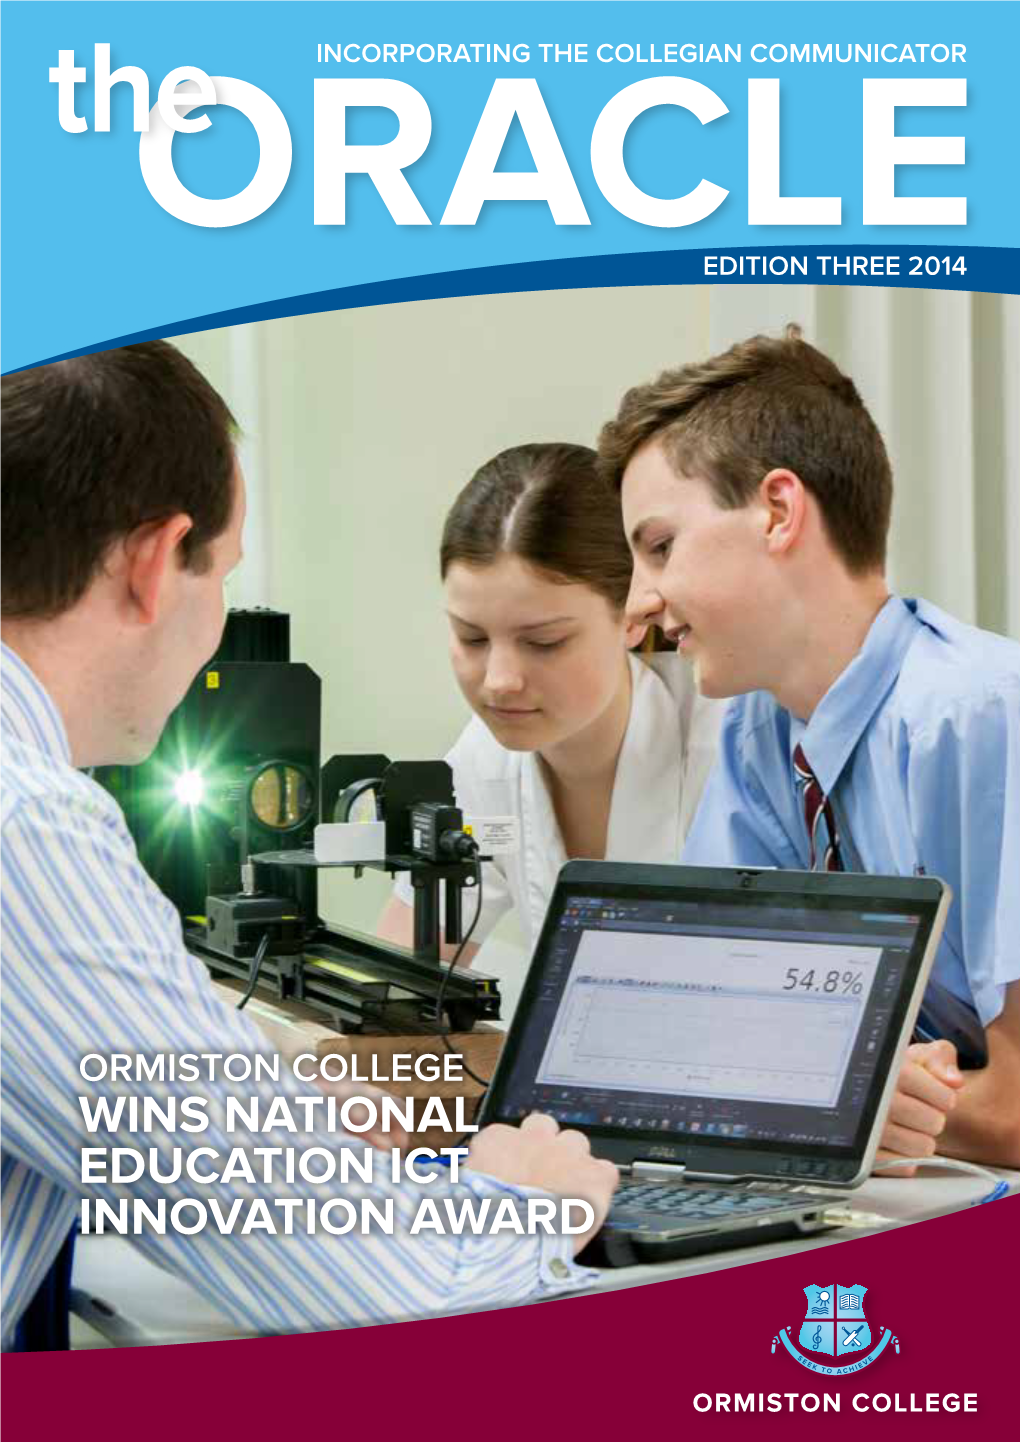 Wins National Education Ict Innovation Award